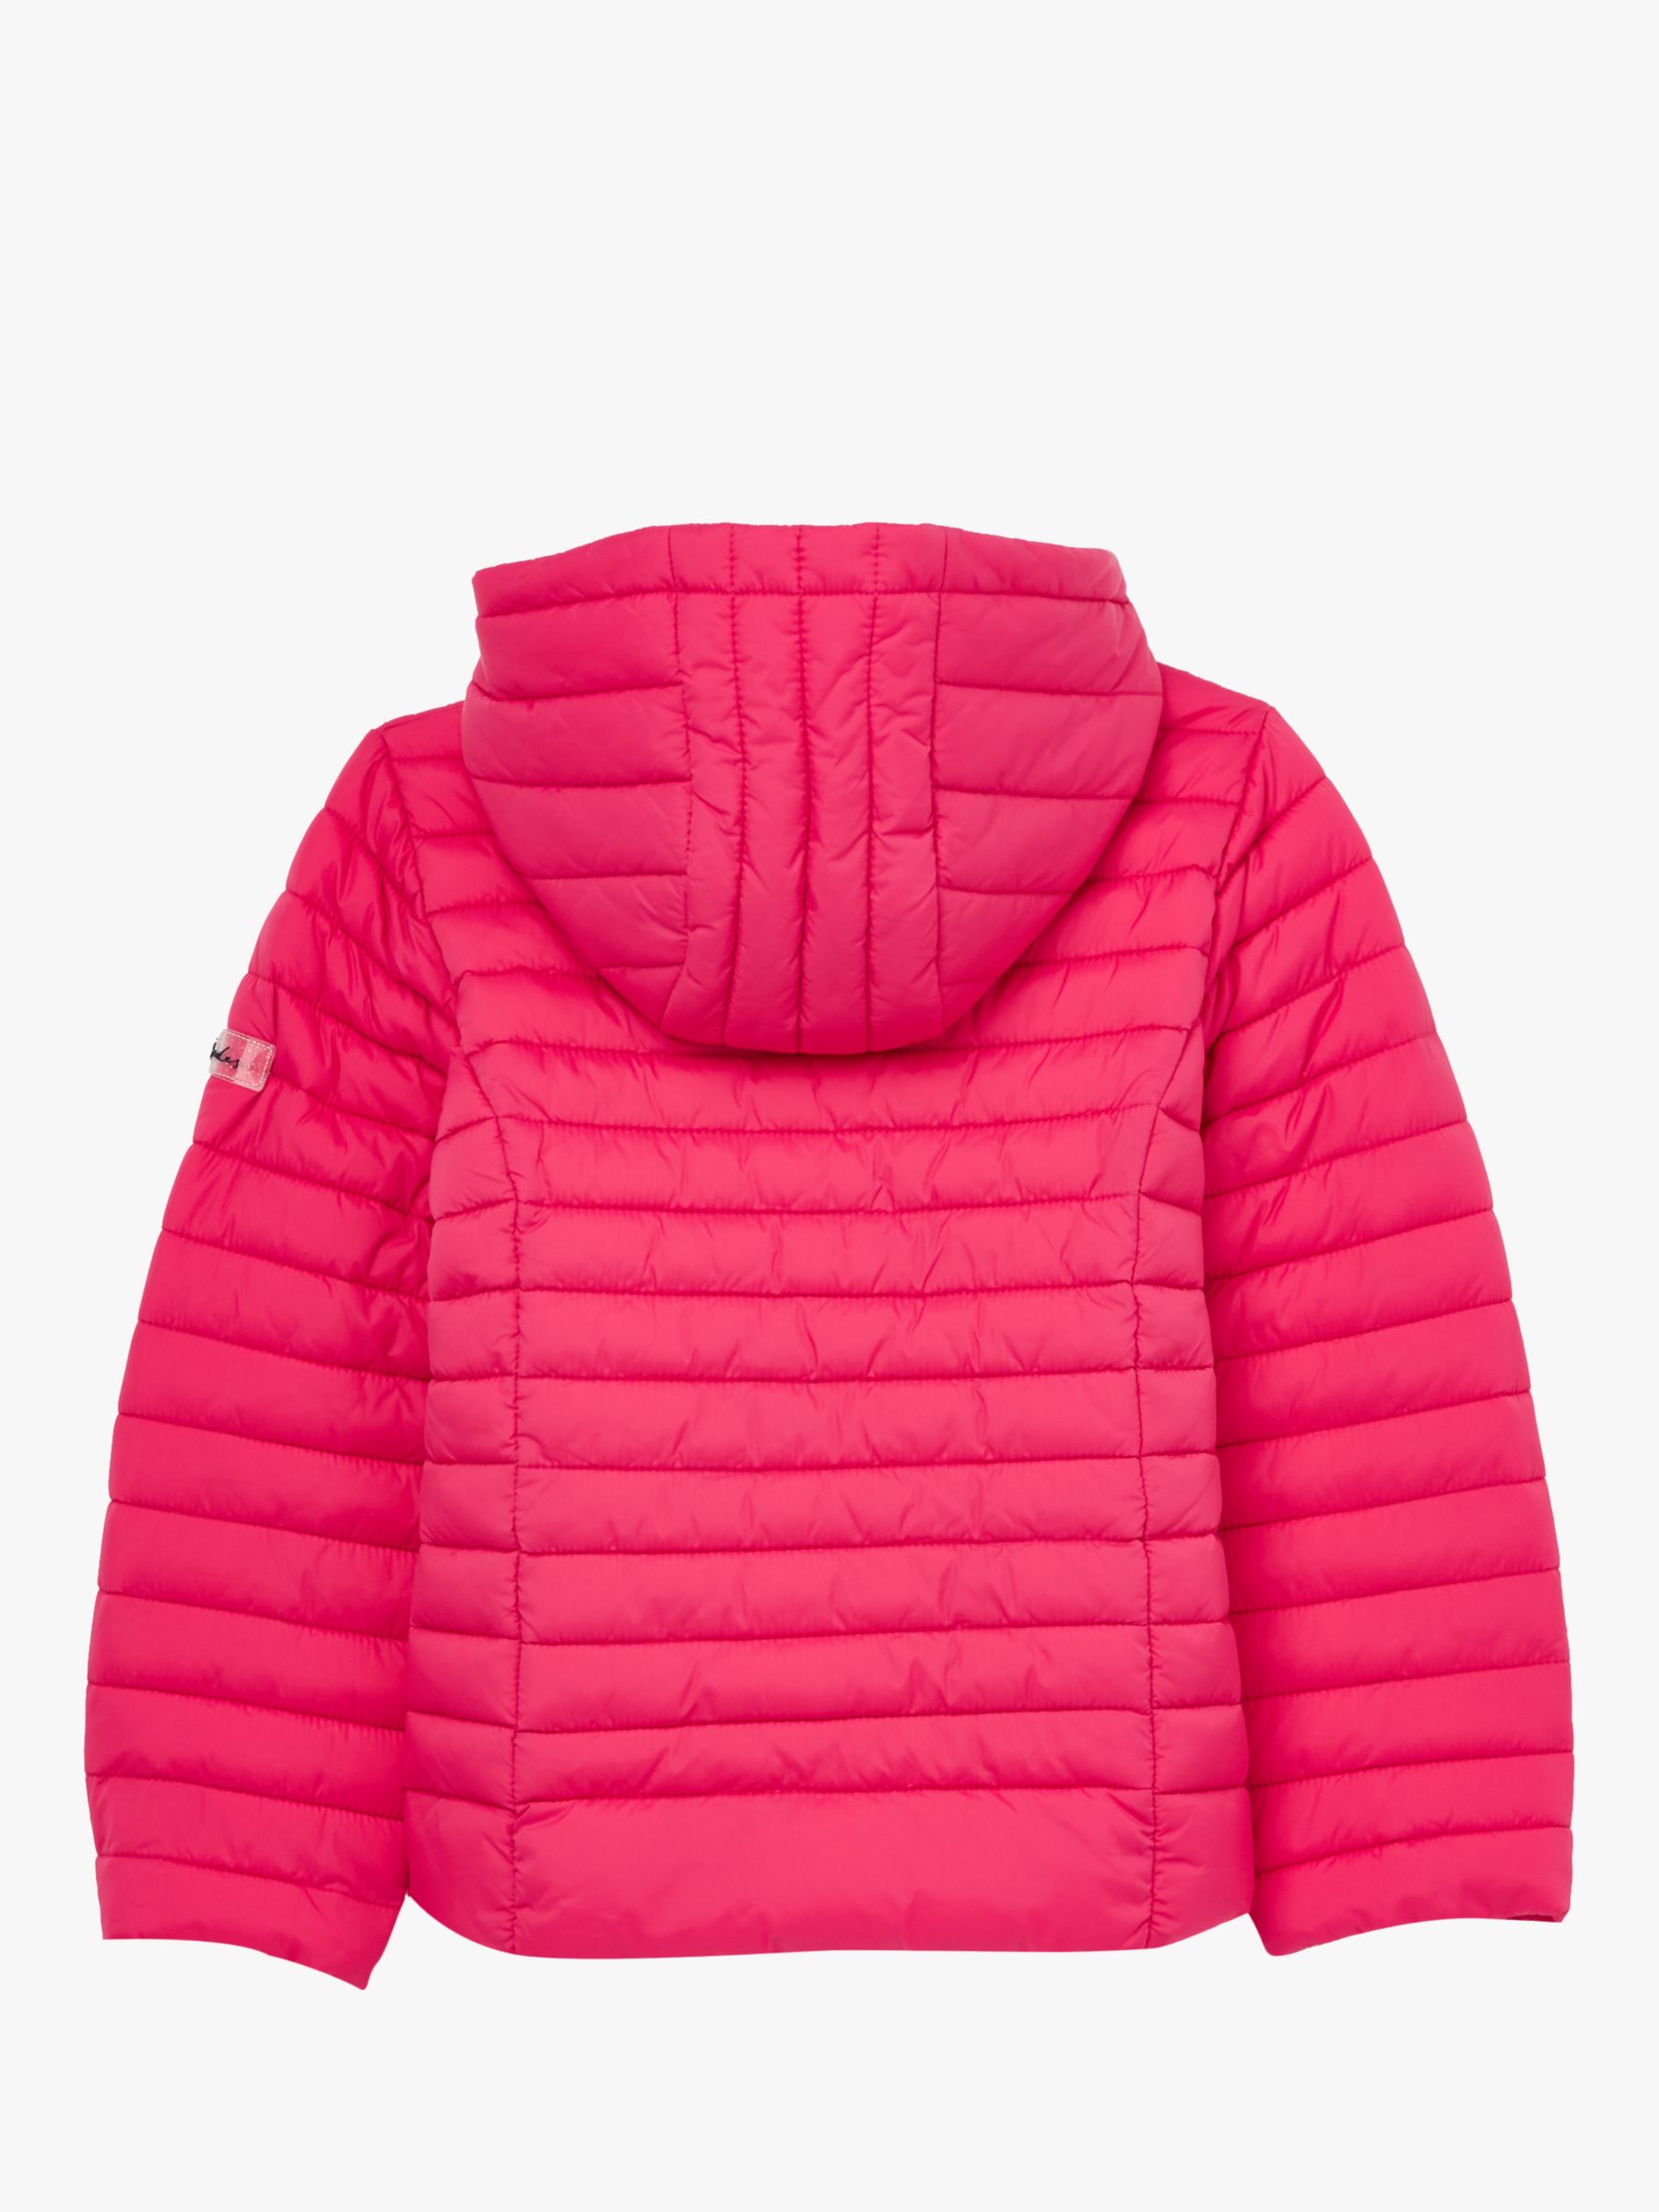 Little Joule Girls' Kinnaird Jacket, Bright Pink